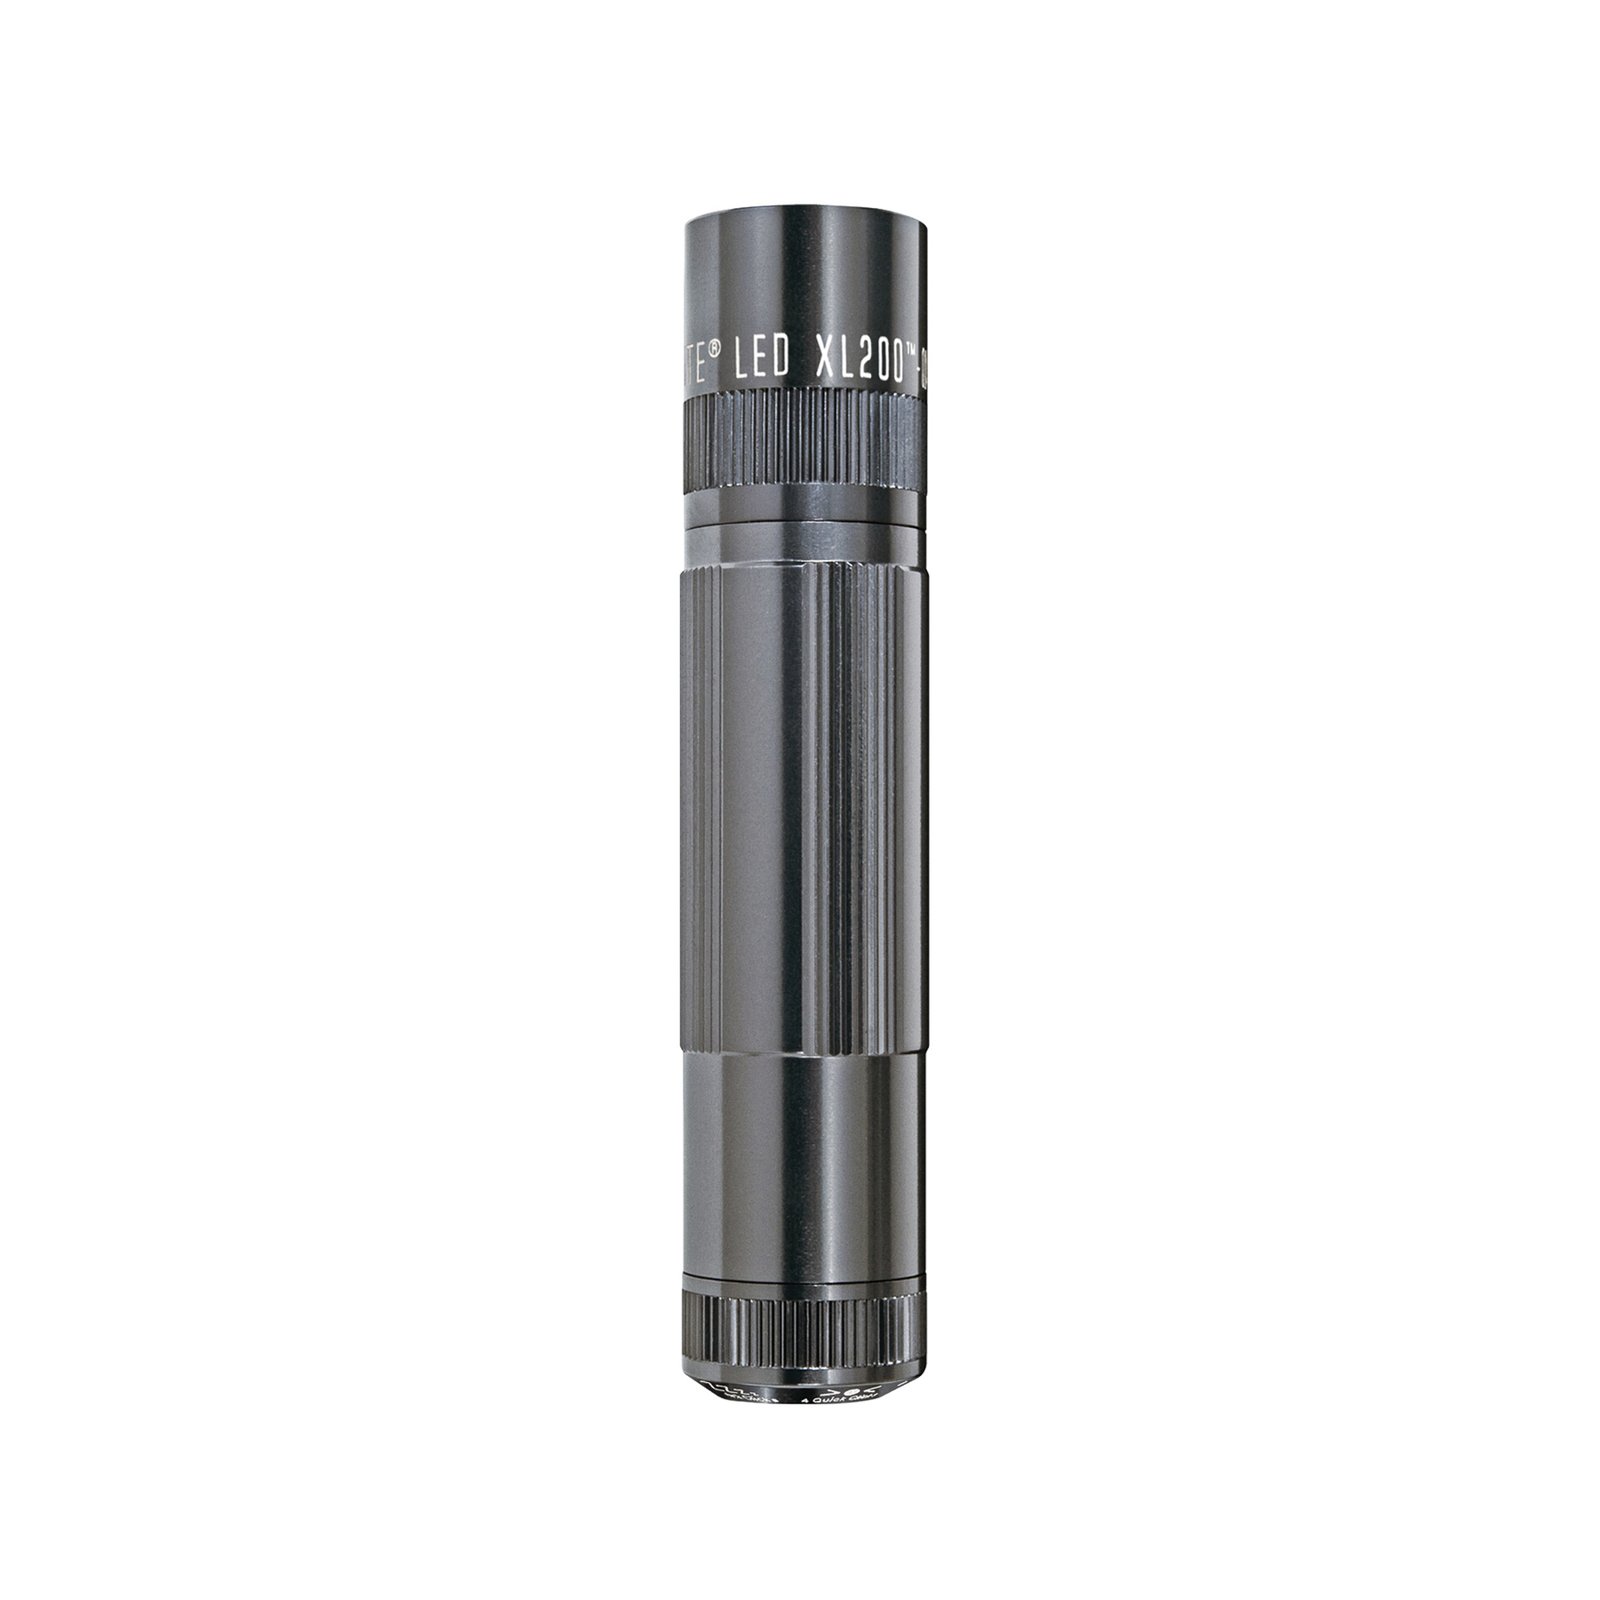 Maglite LED-lommelygte XL200, 3-Cell AAA, grå